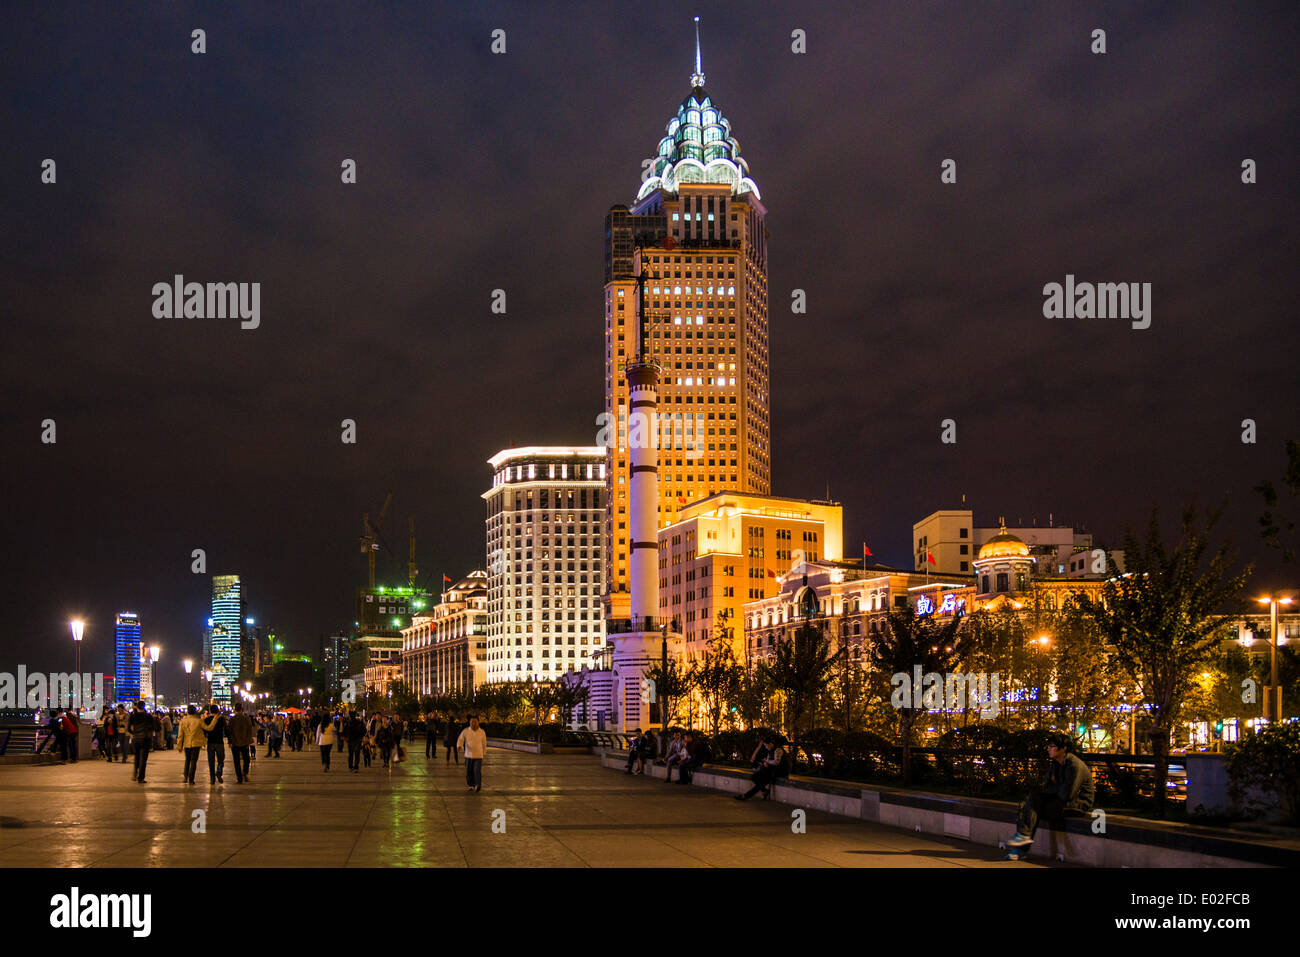 The Bund, promenade at the Huangpu River at night, Shanghai, China Stock Photo